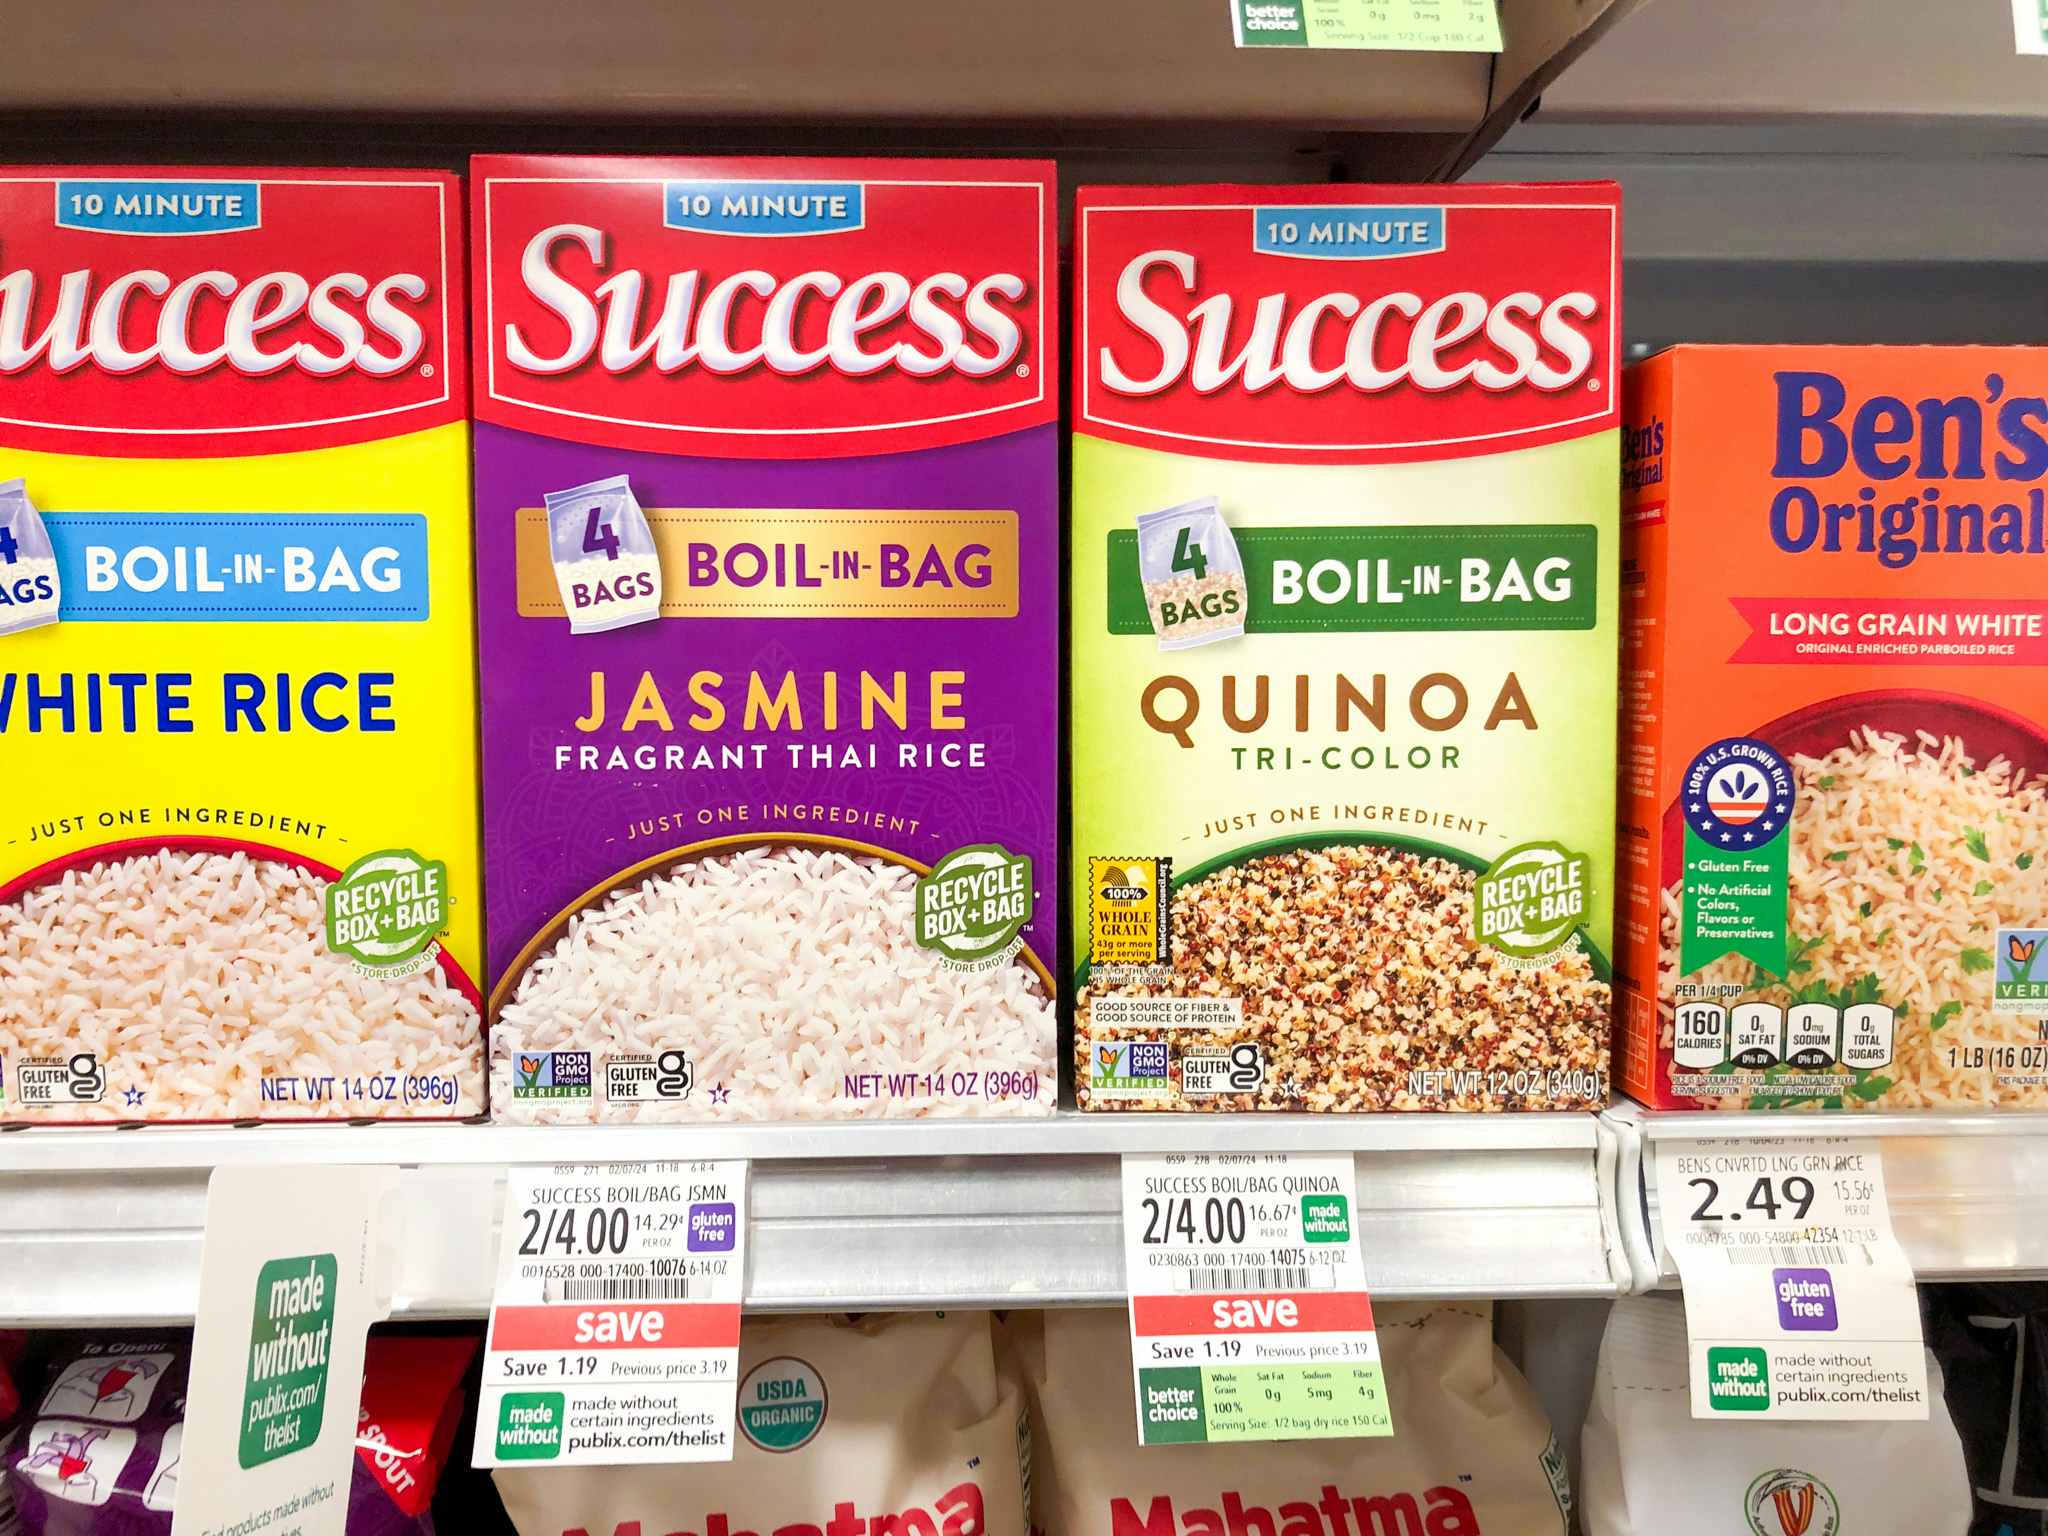 publix success boil in bag jasmine rice 1